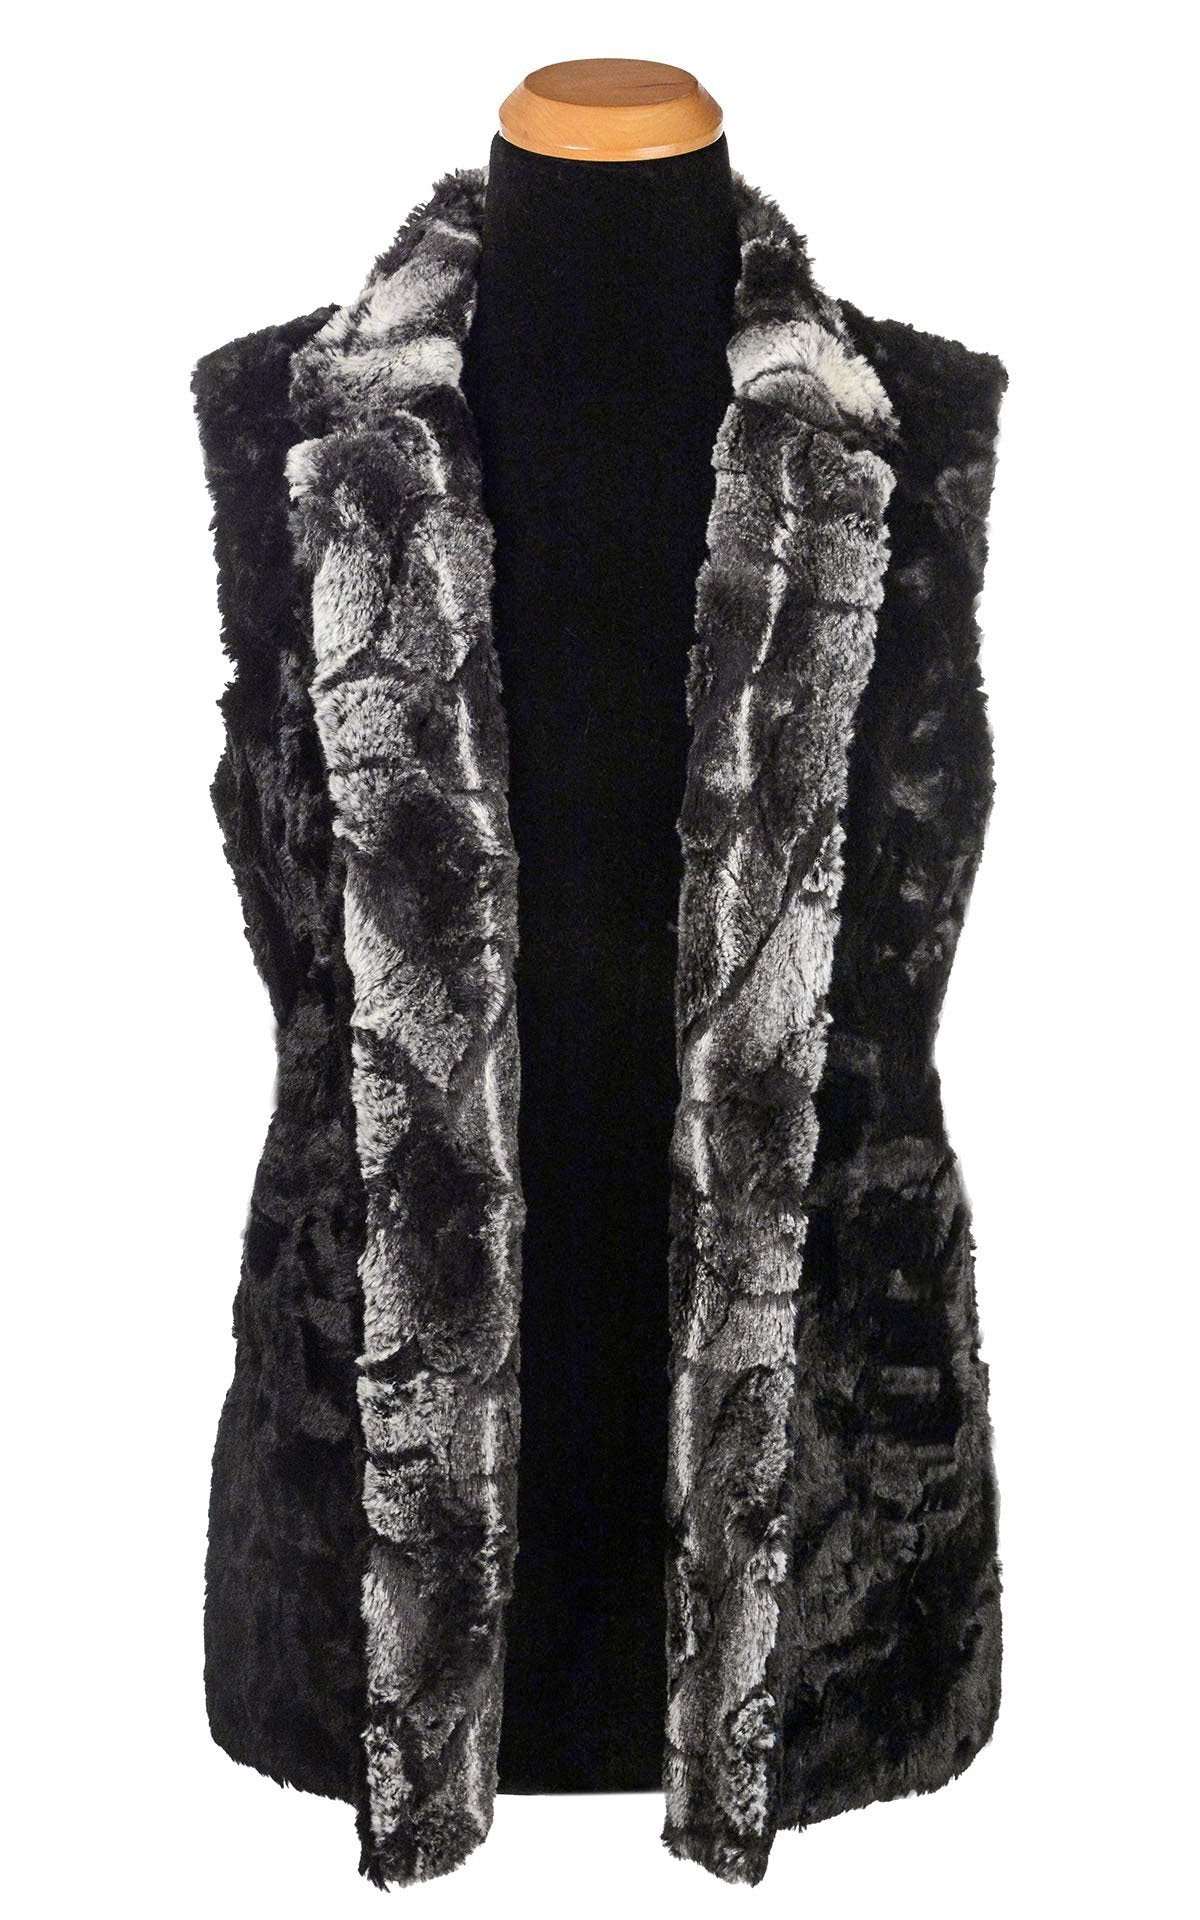 Mandarin Vest Short, Reversible less pockets - Luxury Faux Fur in Honey Badger with Cuddly Fur